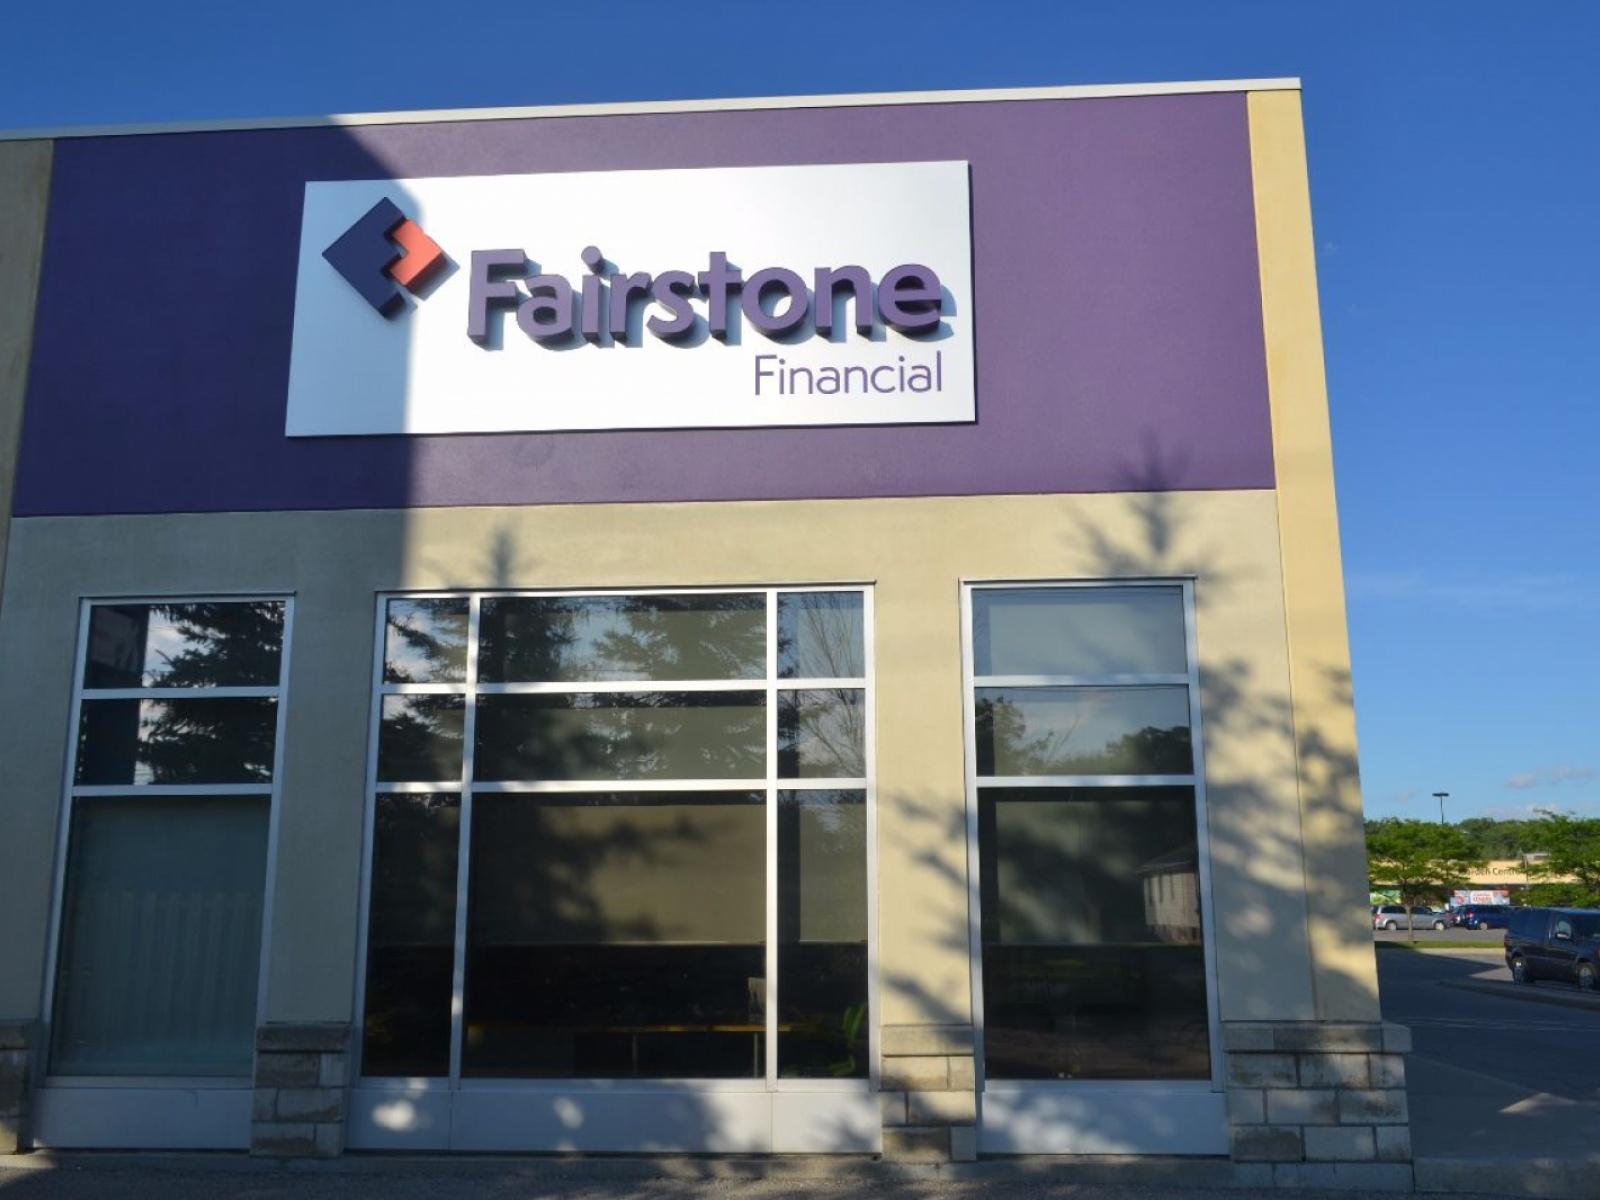 Fairstone Financial corporate signage